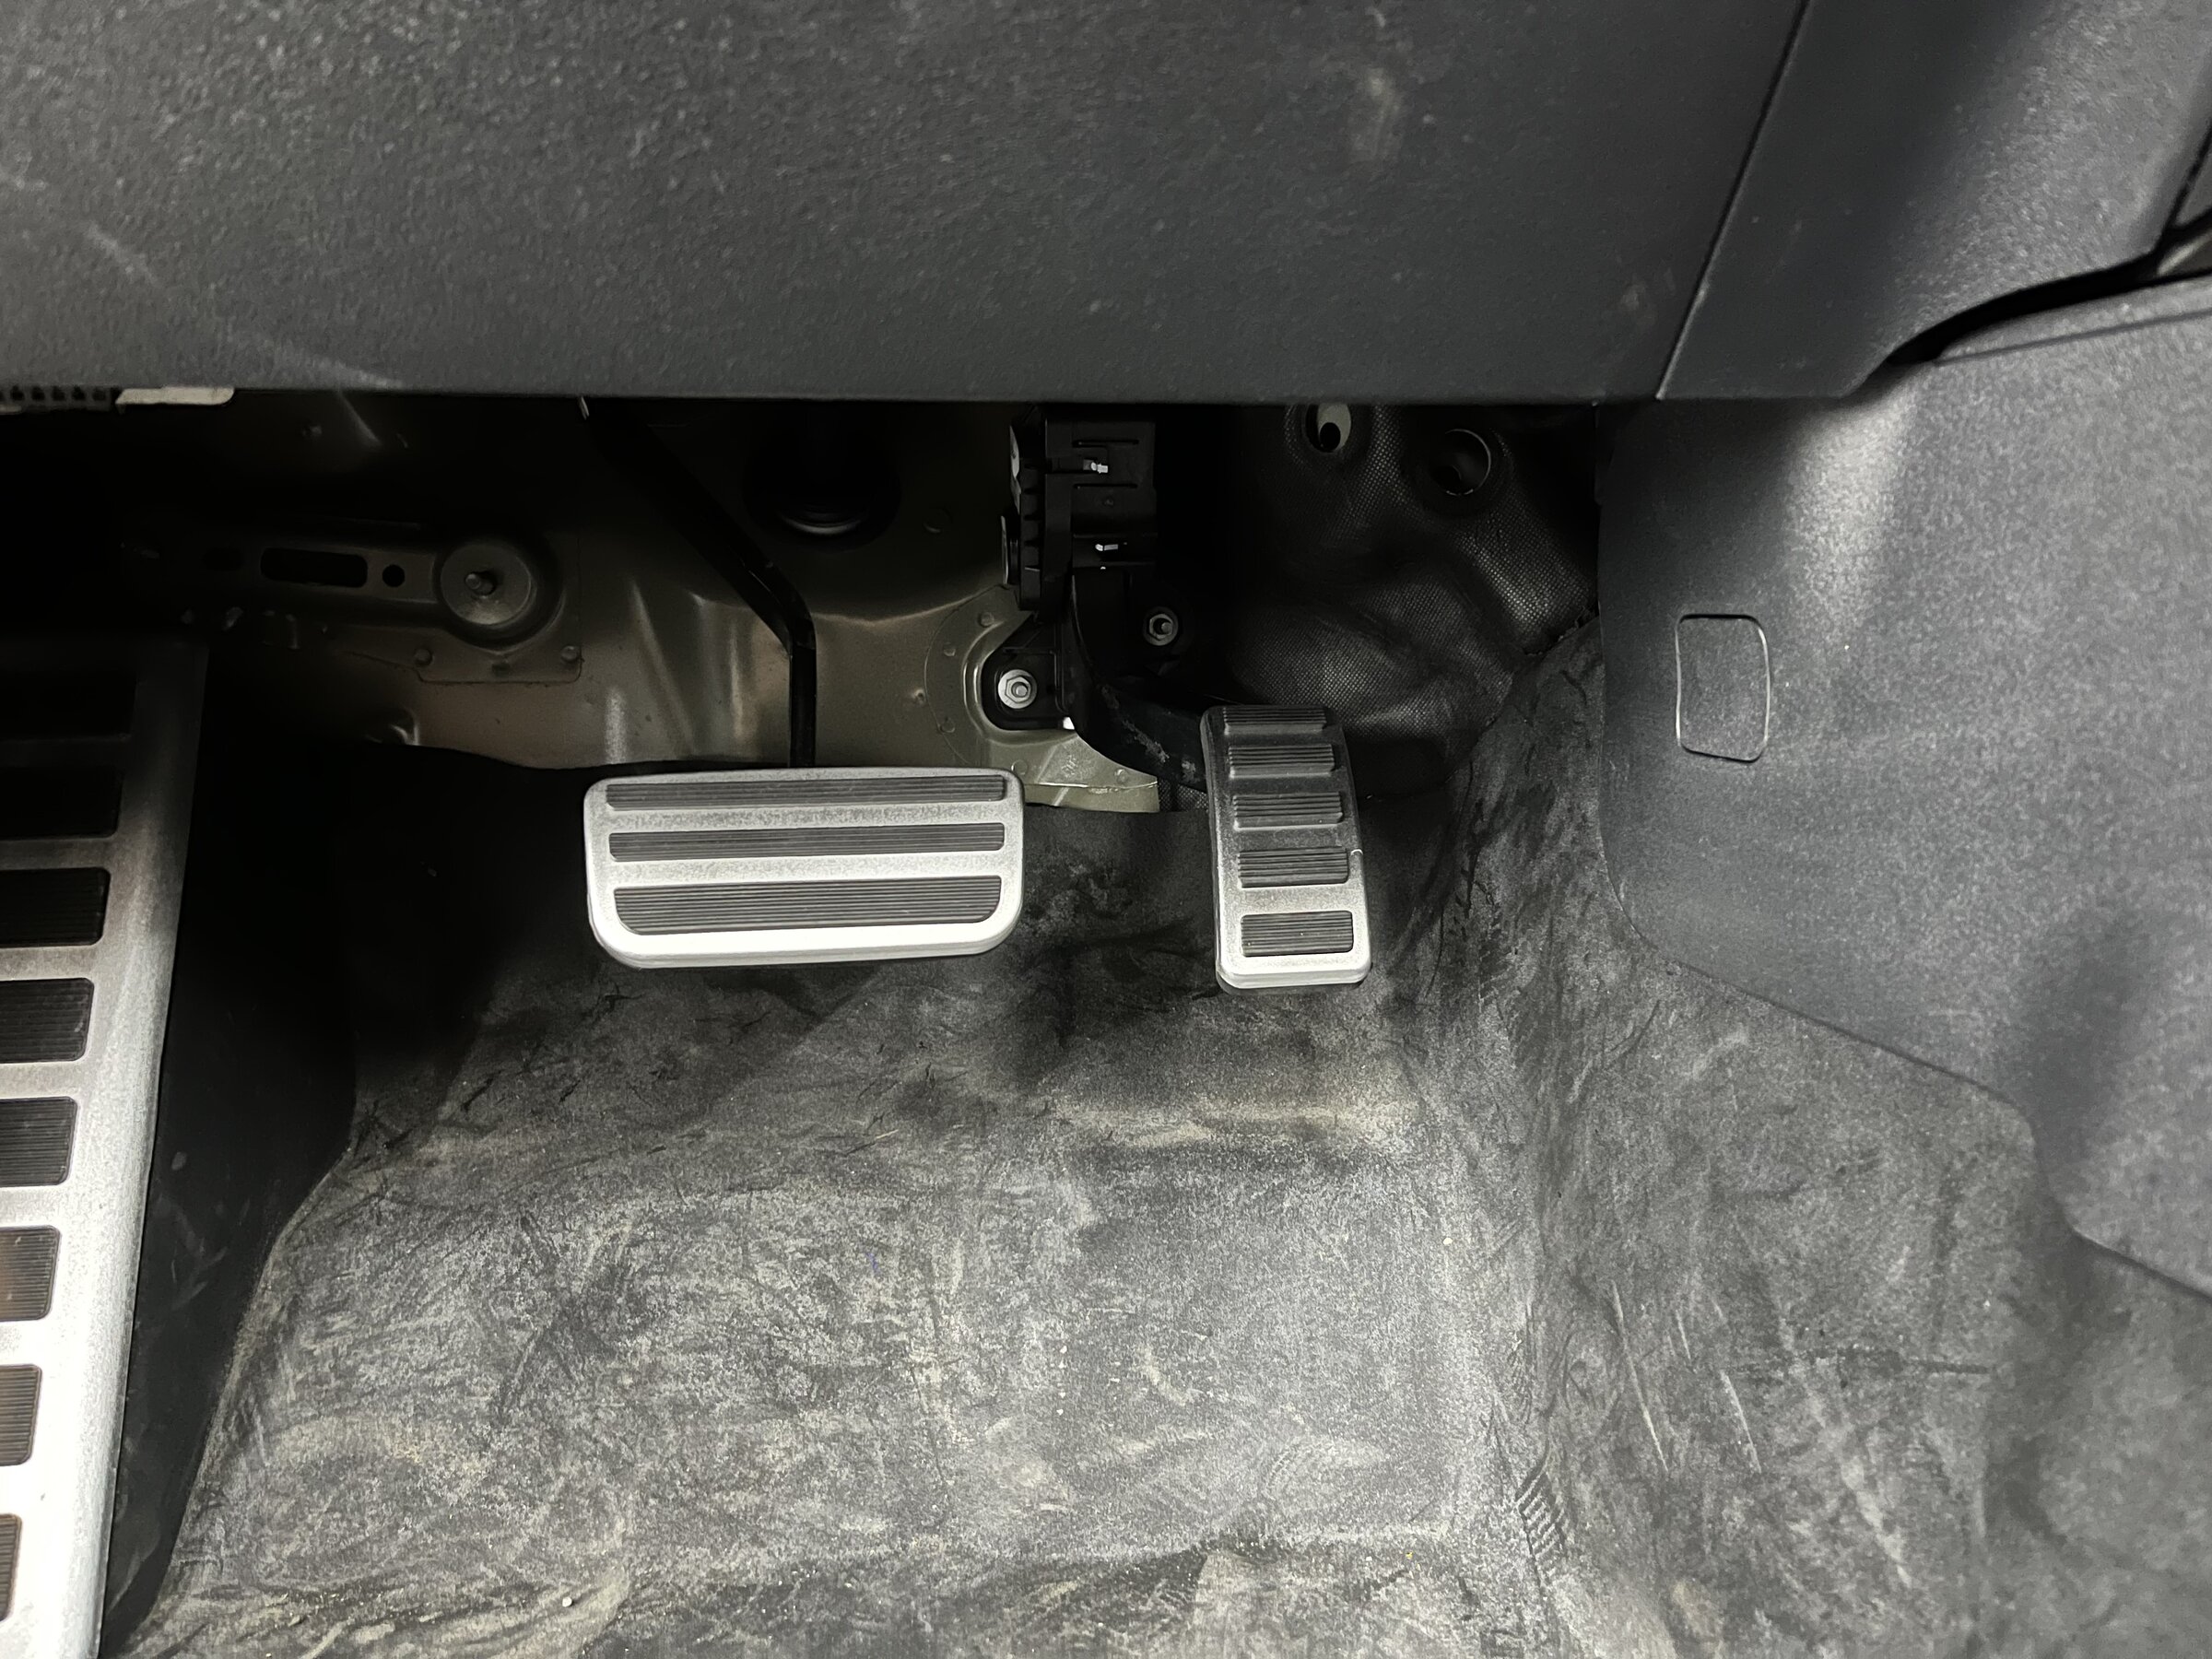 Ford Bronco Mabett Accelerator Brake Pedal Cover and Rest Pedal Cover & Volume Air Conditioner Knob Control Panel Cover Coming Soon! lQDPDhtGfOJf2QXNC9DND8CwWCwpqpp6GI8CRCkSWkDDAA_4032_3024